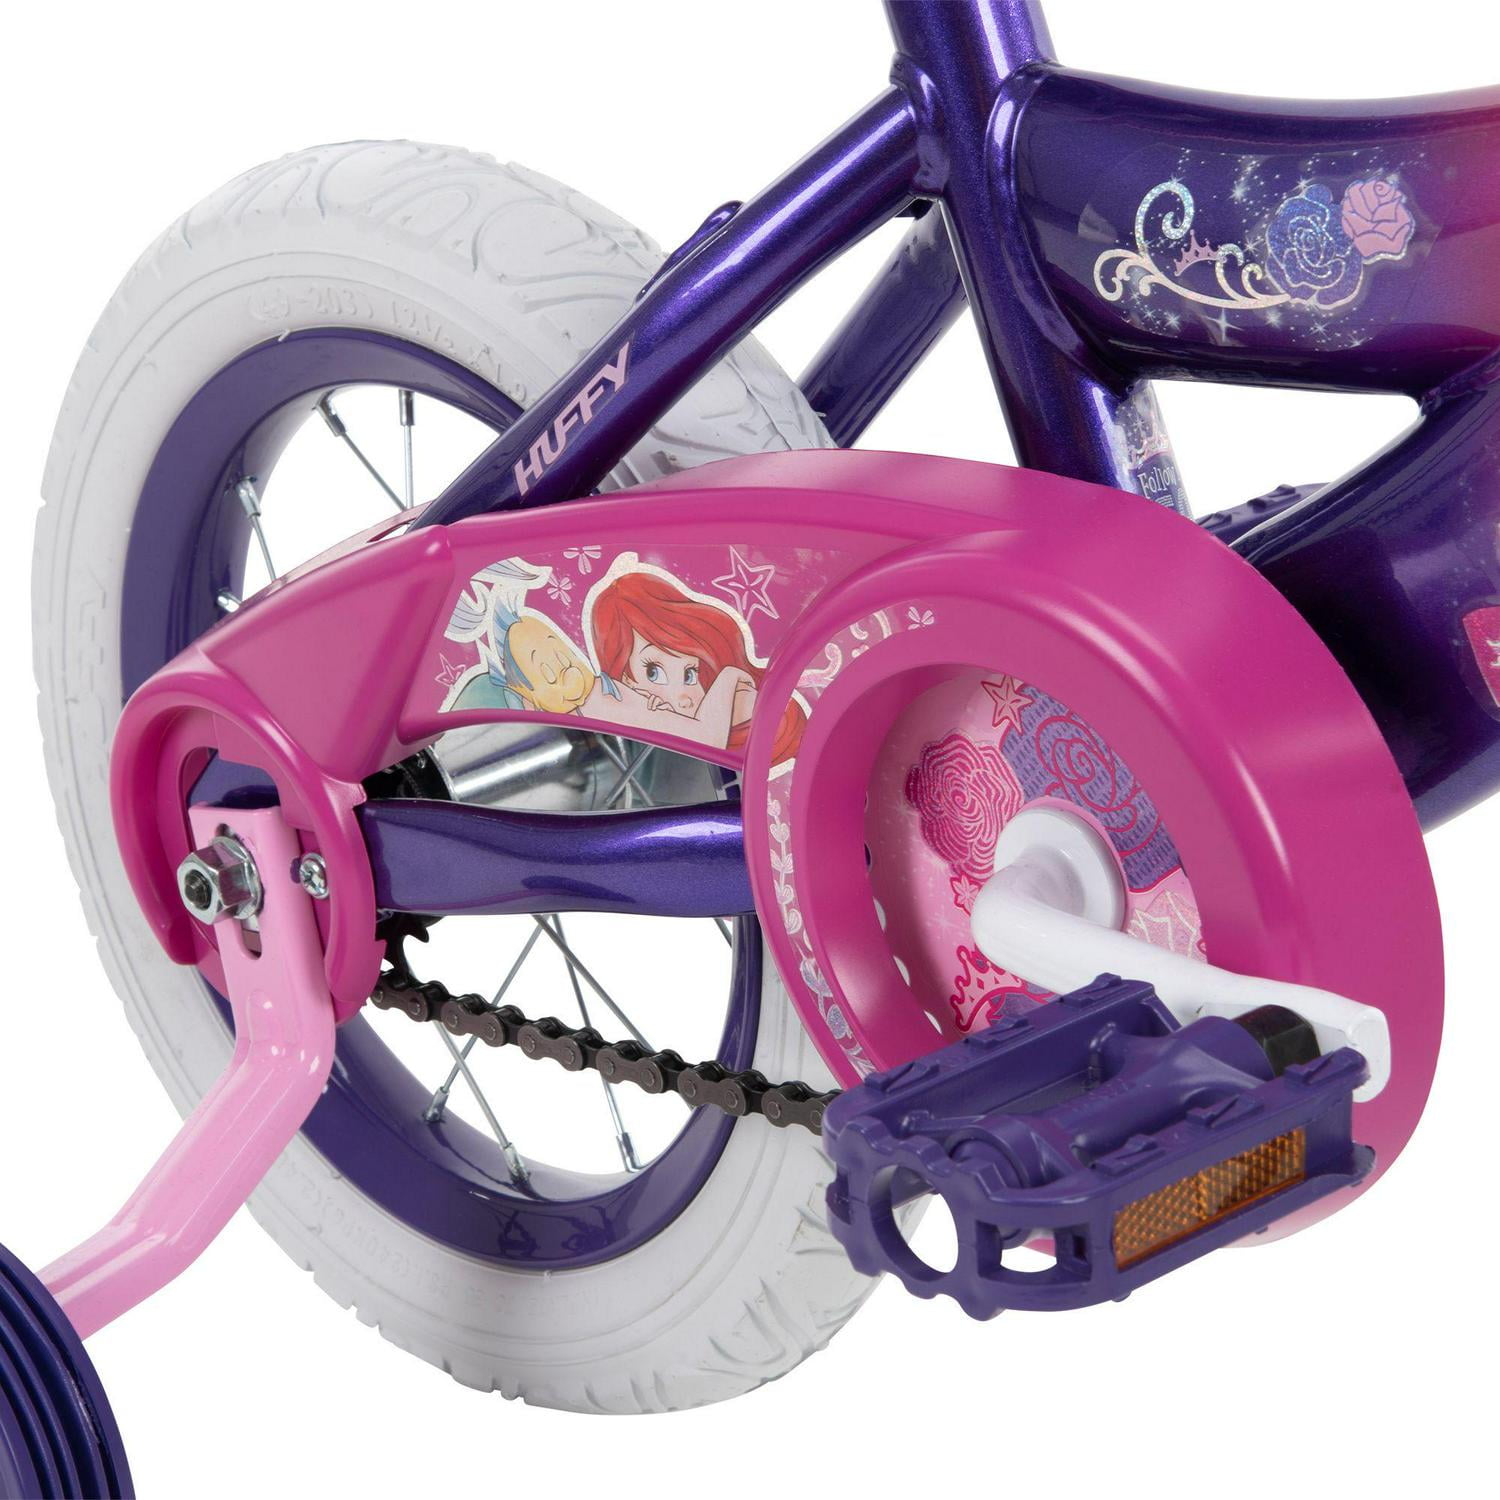 Huffy Girls\' 12 in. Disney Bubble-Maker, Hot Princess 1 Speed, with Pink/Indigo Bike